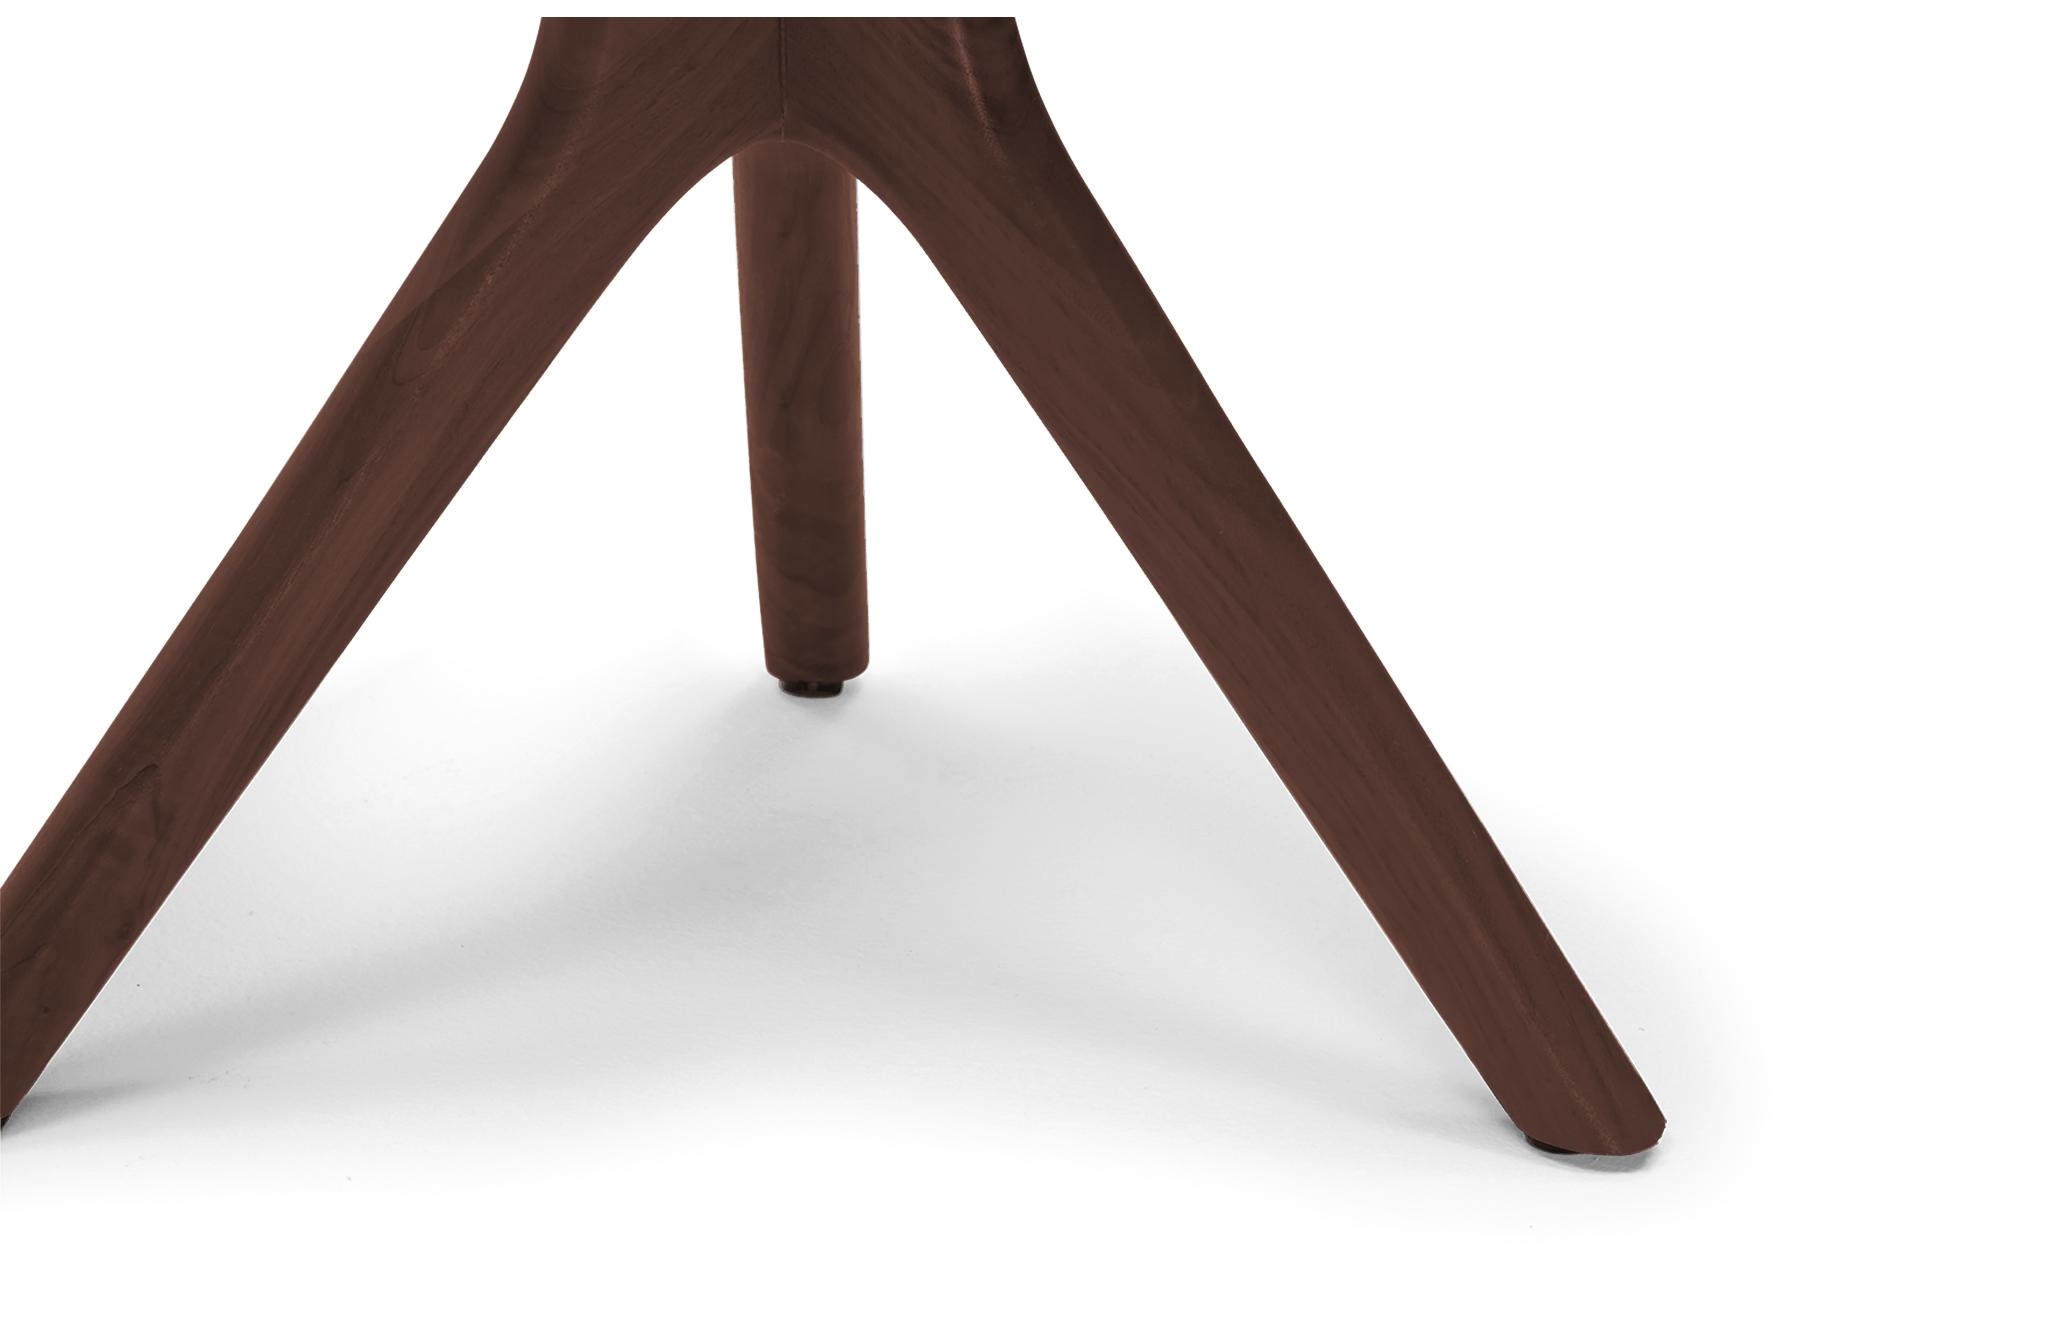 Tolson Mid Century Modern (Wood Top) End Table - Walnut - Image 3